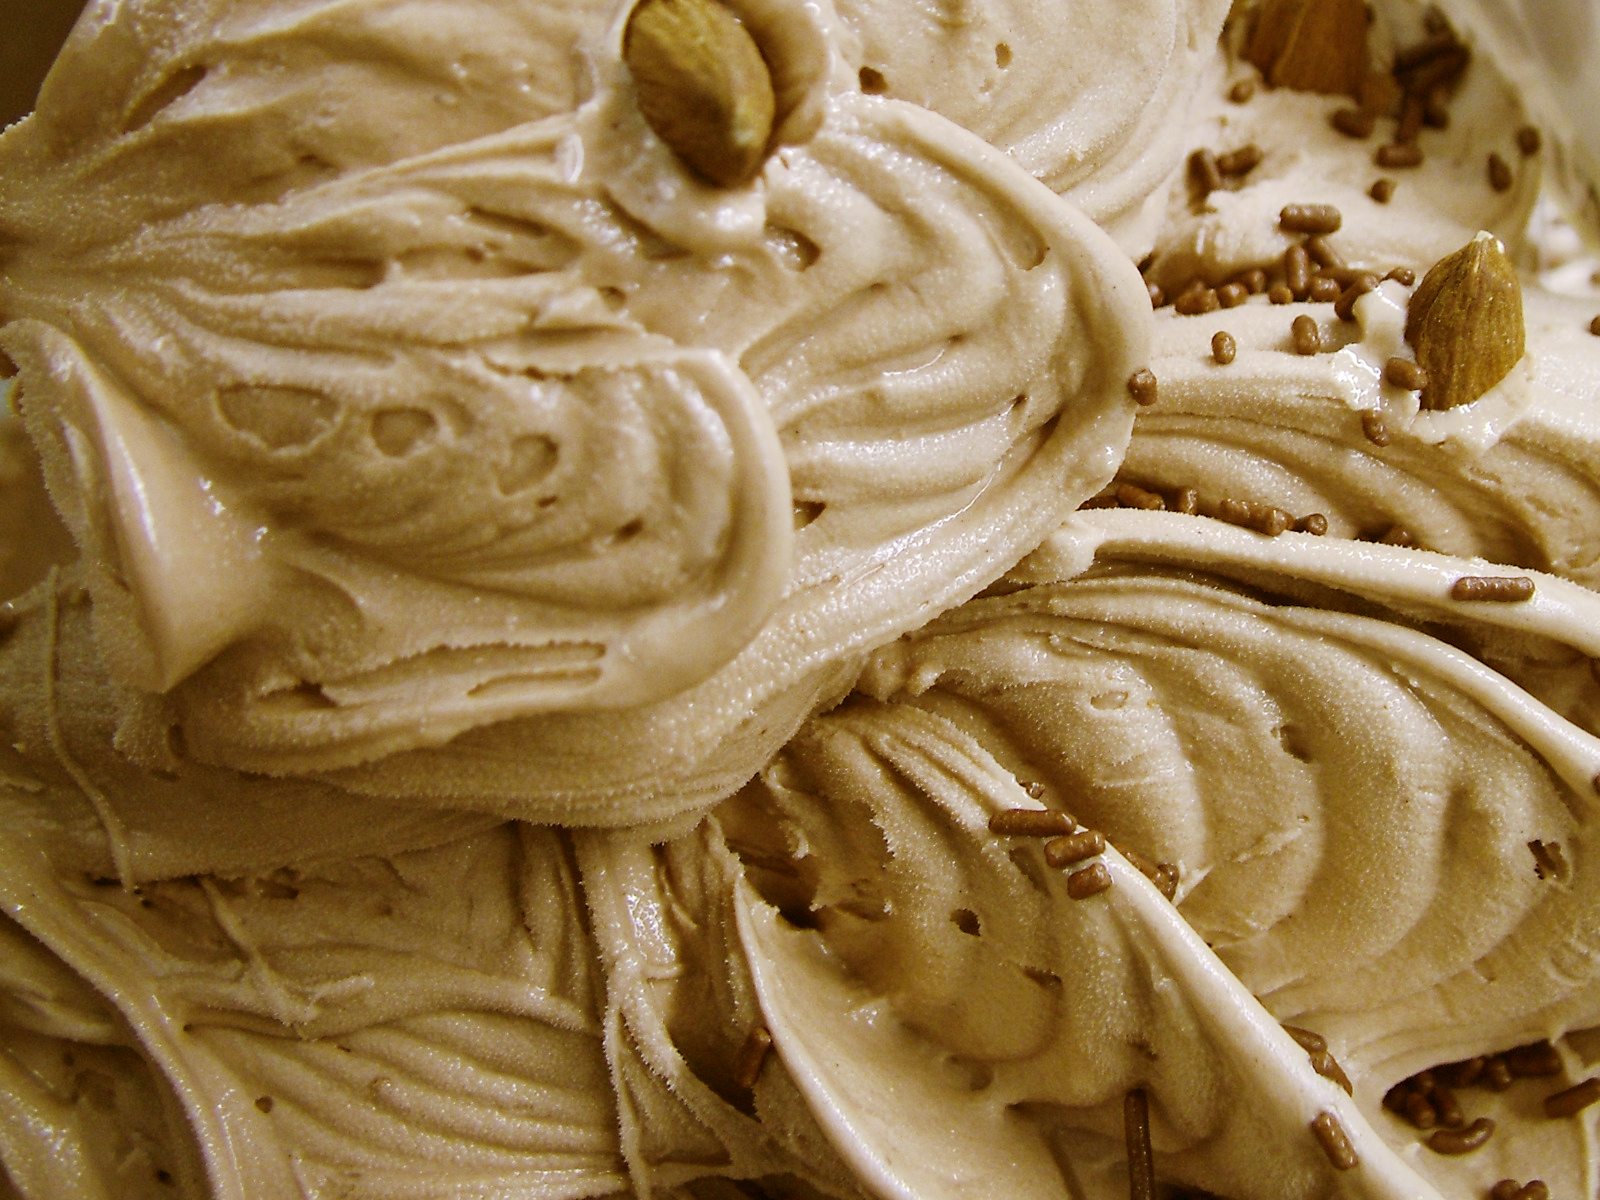 File:Caramel Nut Ice Cream 01.jpg - Wikimedia Commons